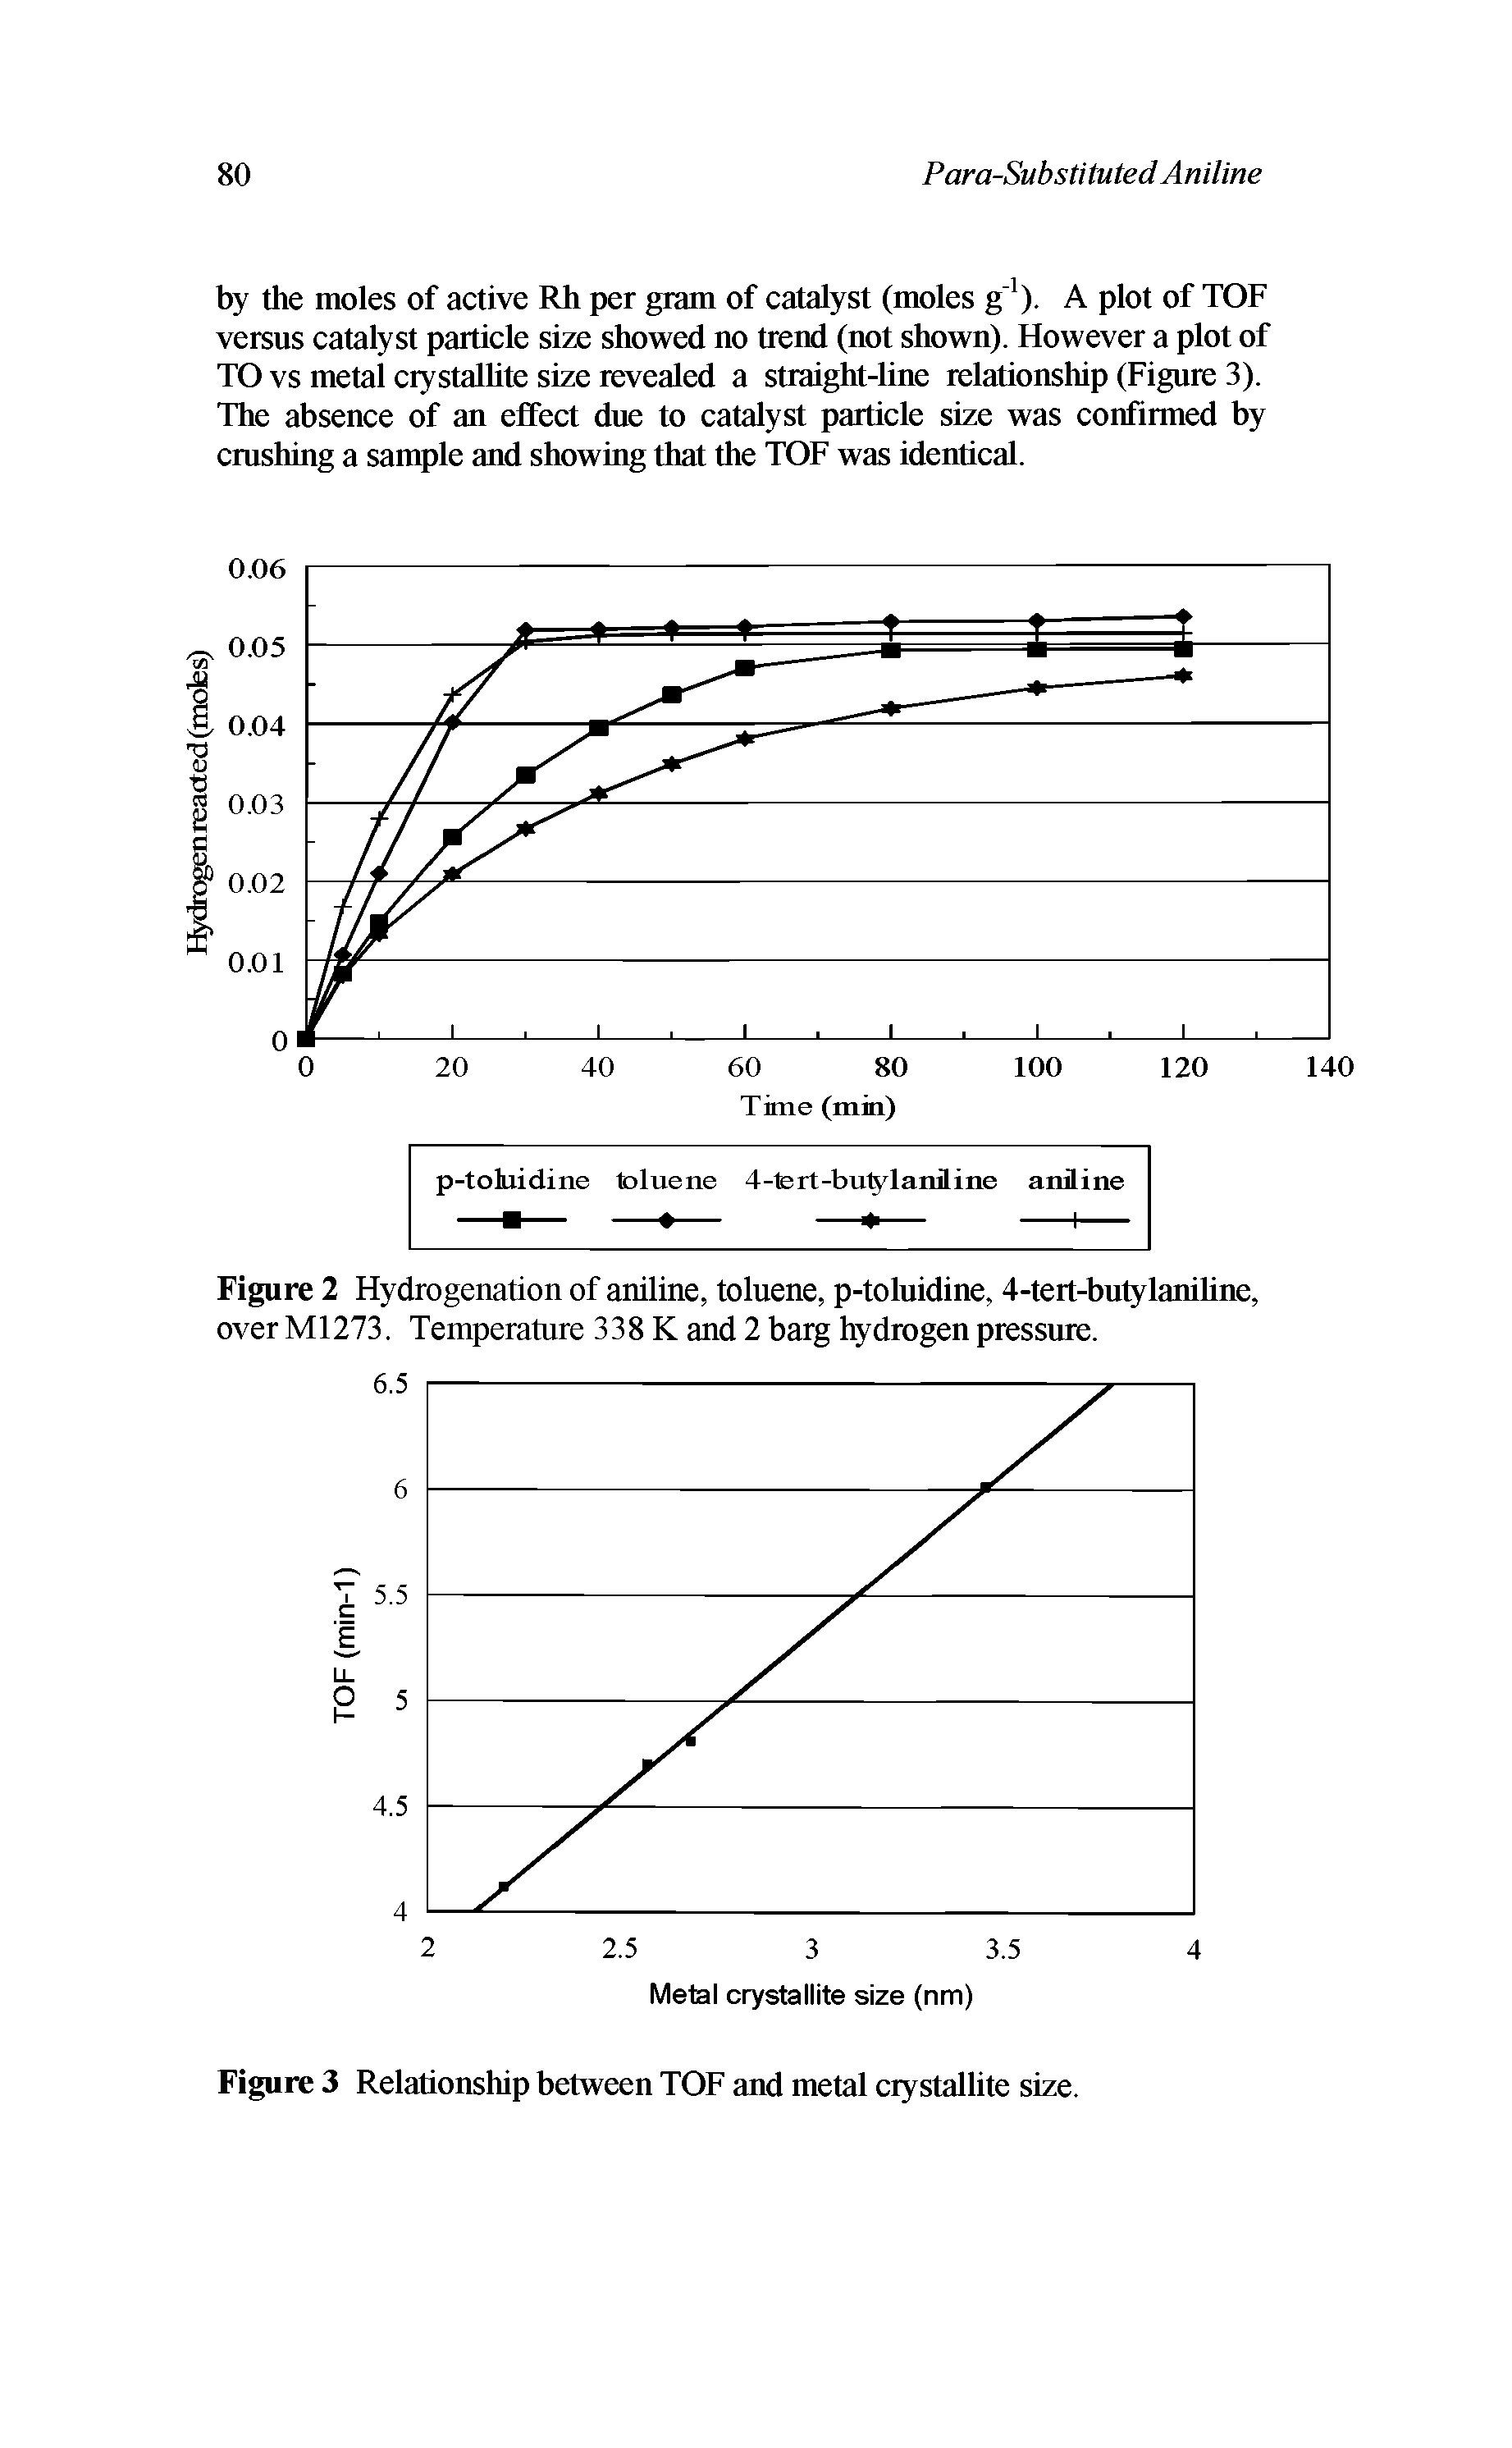 Figure 2 Hydrogenation of aniline, toluene, p-toluidine, 4-tert-butylaniline, over M1273. Temperature 338 K and 2 barg hydrogen pressure.